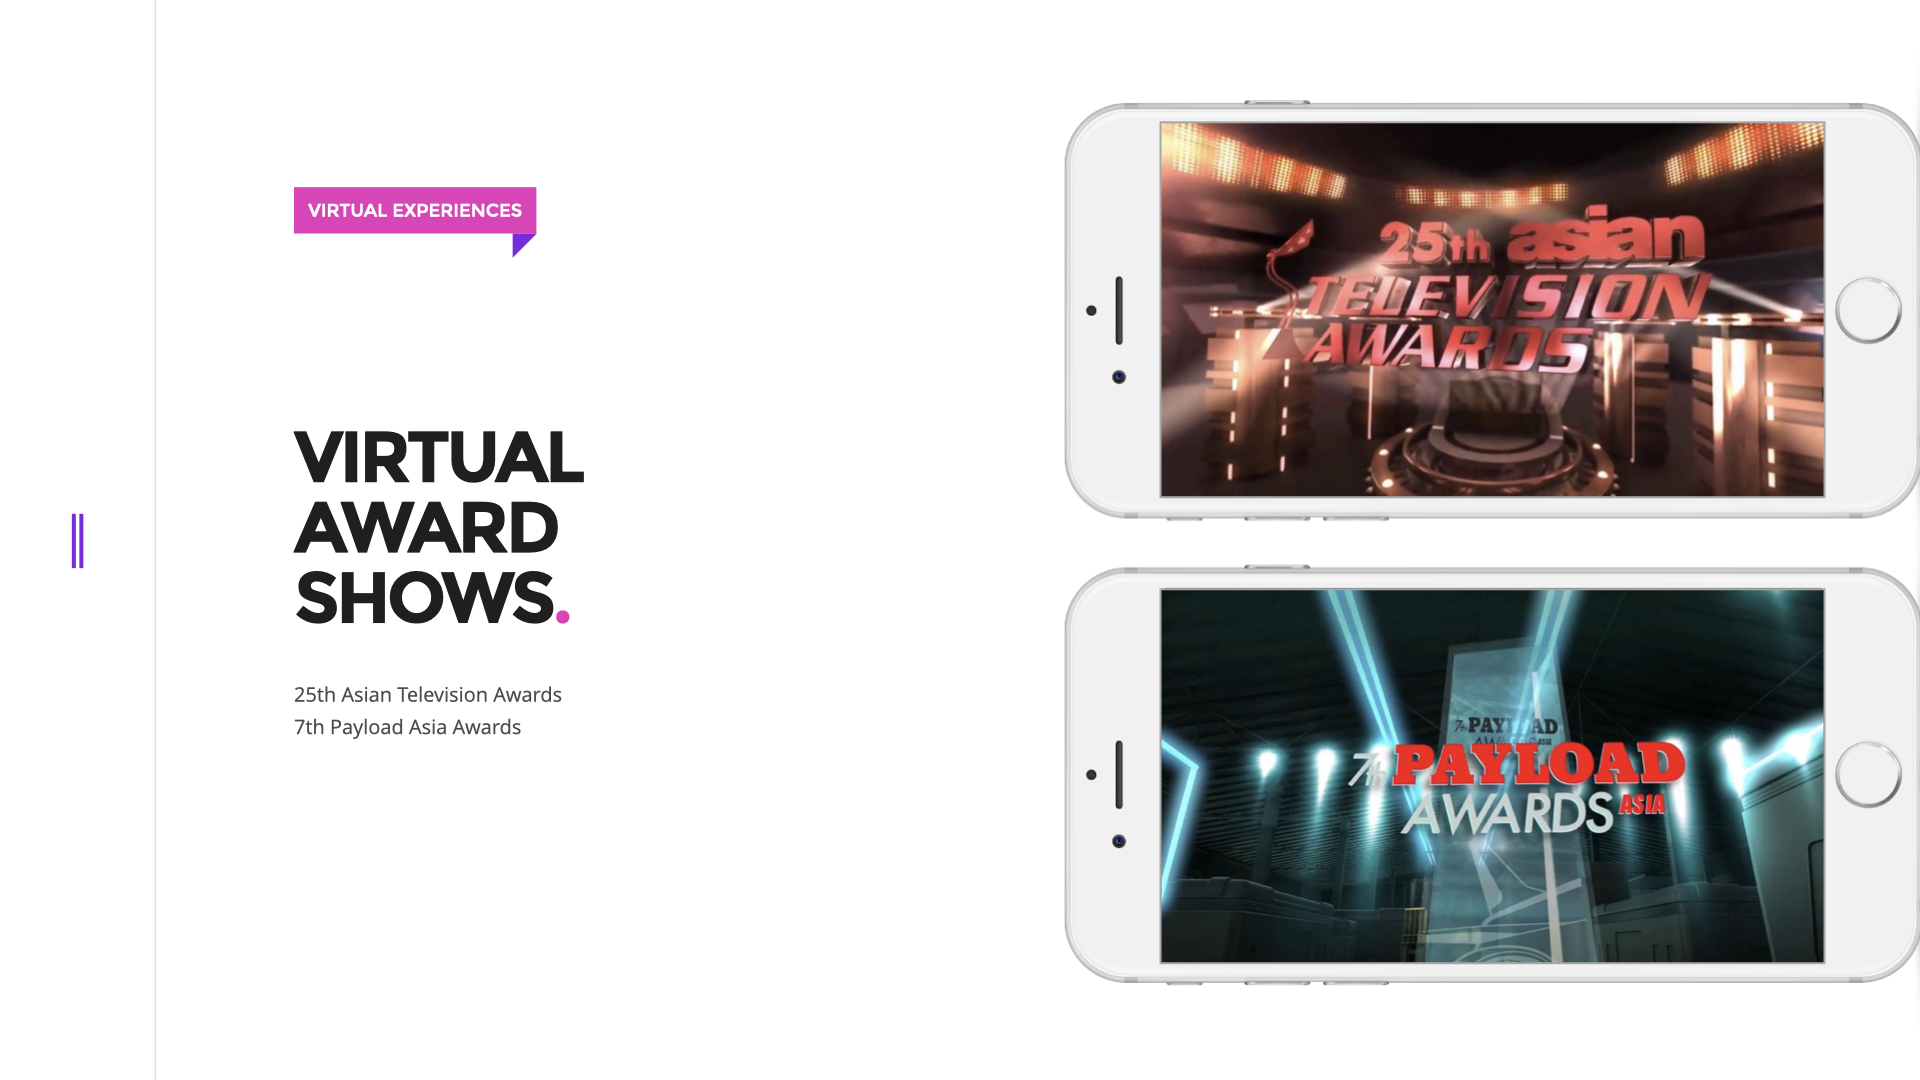 Virtual Experiences - Virtual Award Shows